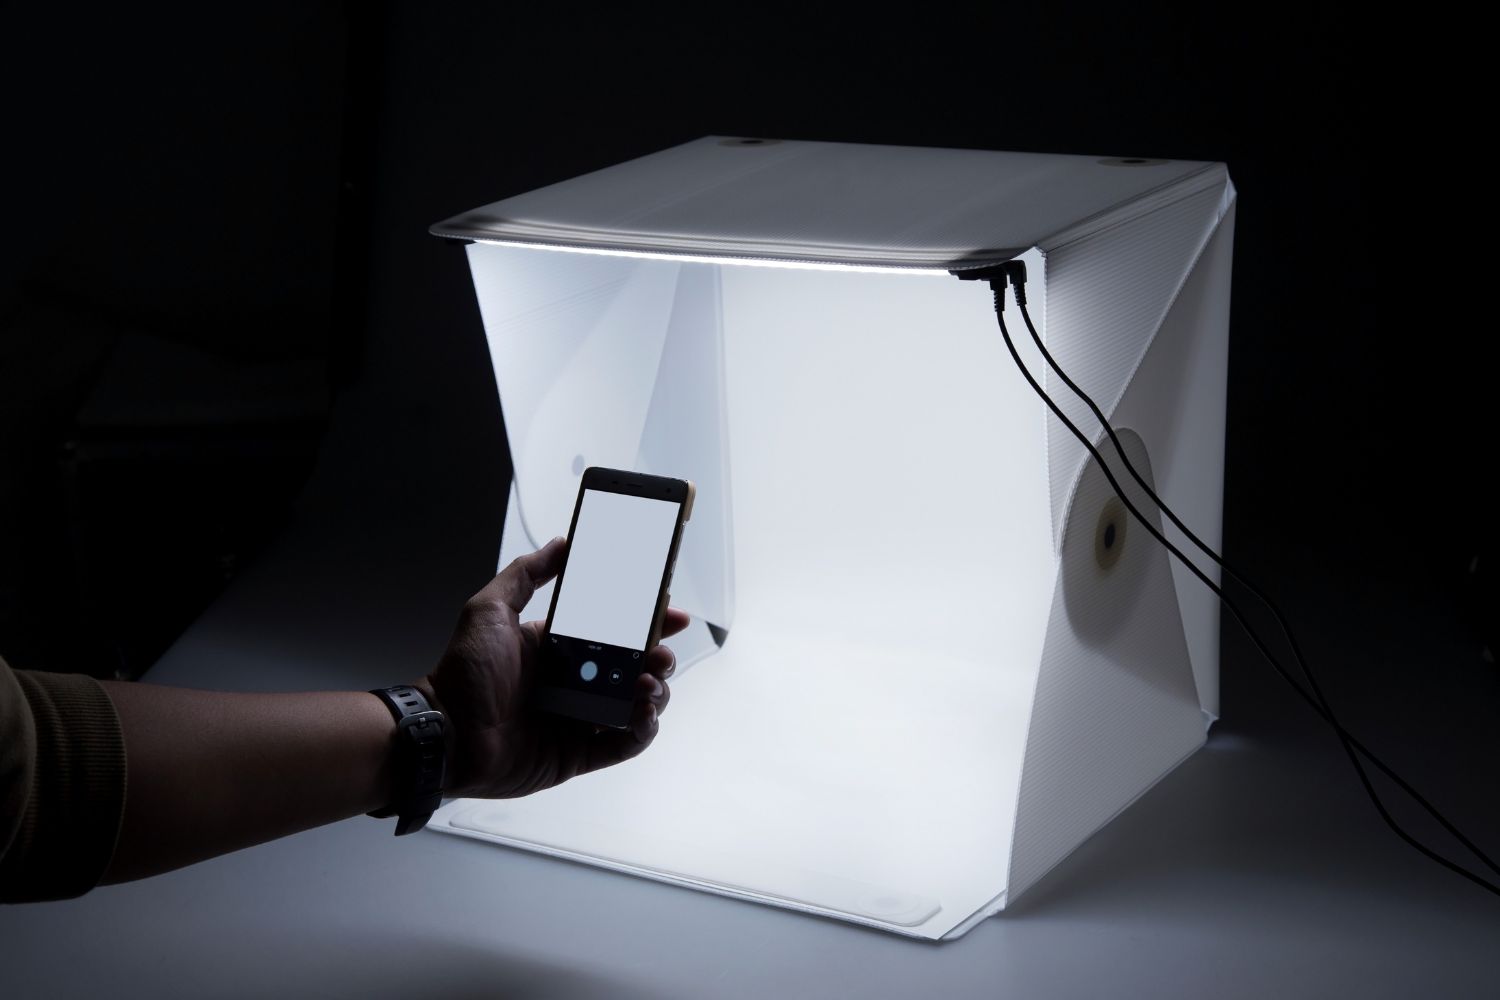 A custom LED light box for photography